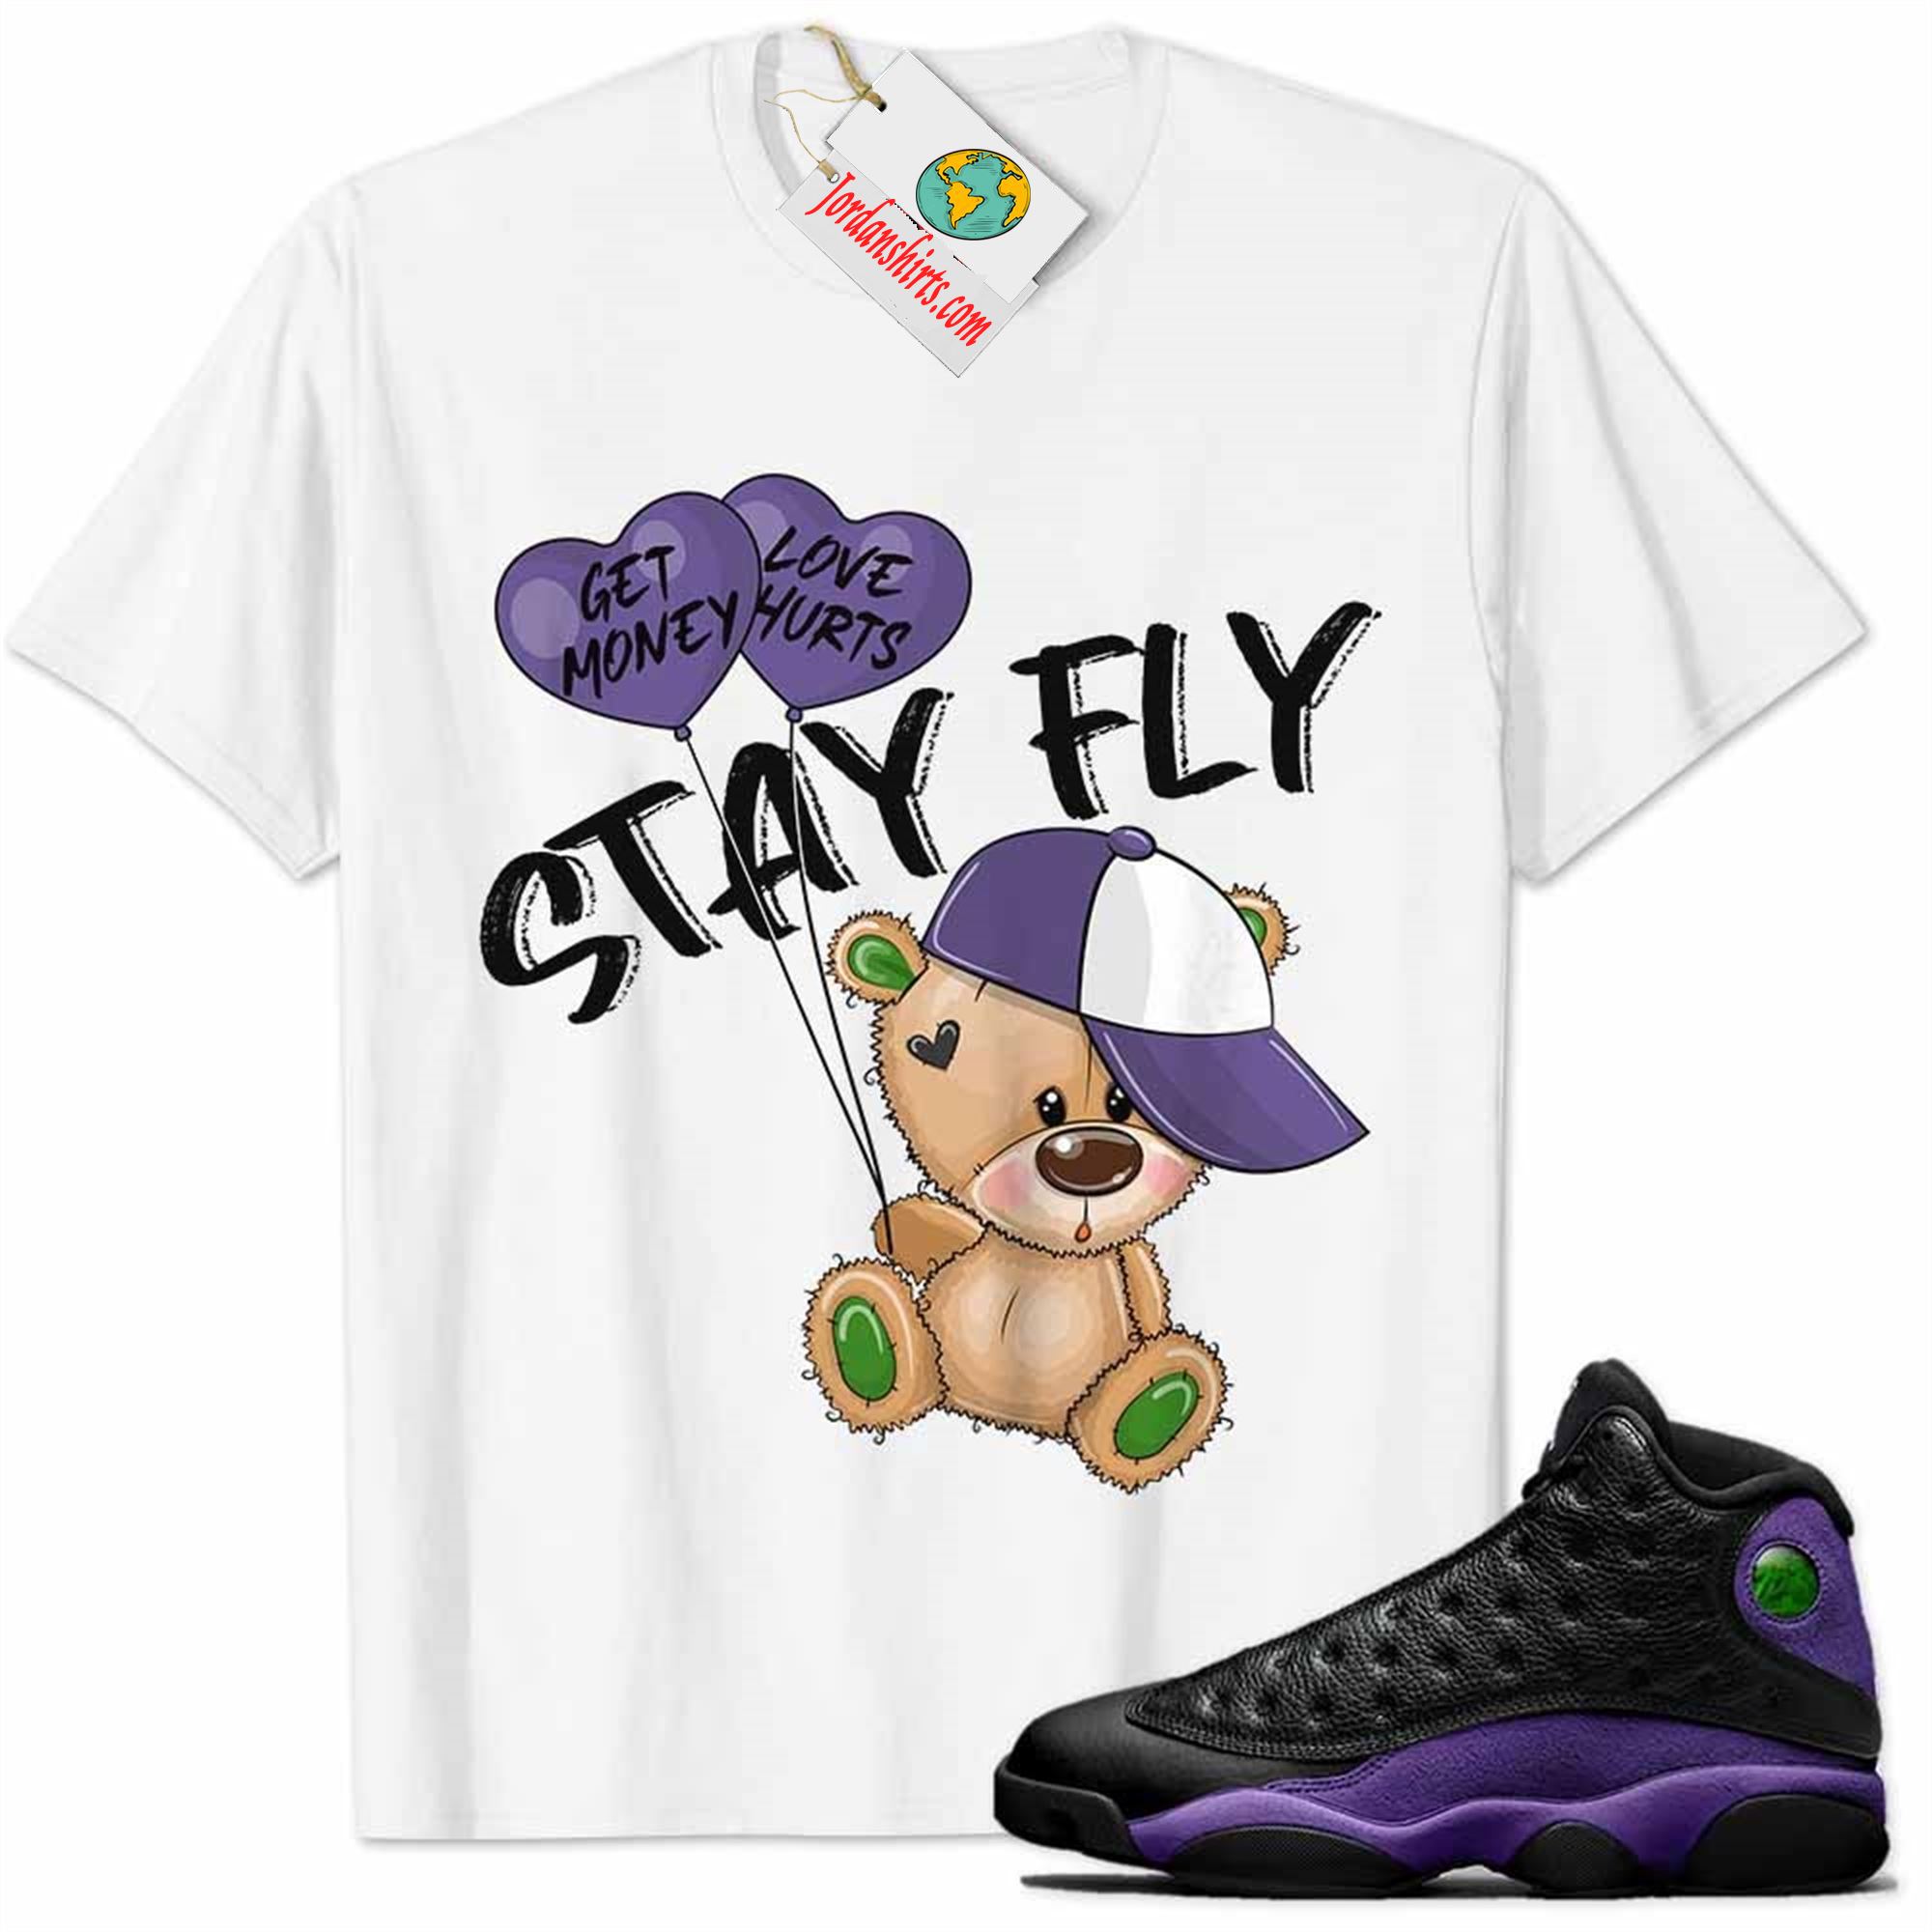 Jordan 13 Shirt, Court Purple 13s Shirt Cute Teddy Bear Stay Fly Get Money White Full Size Up To 5xl